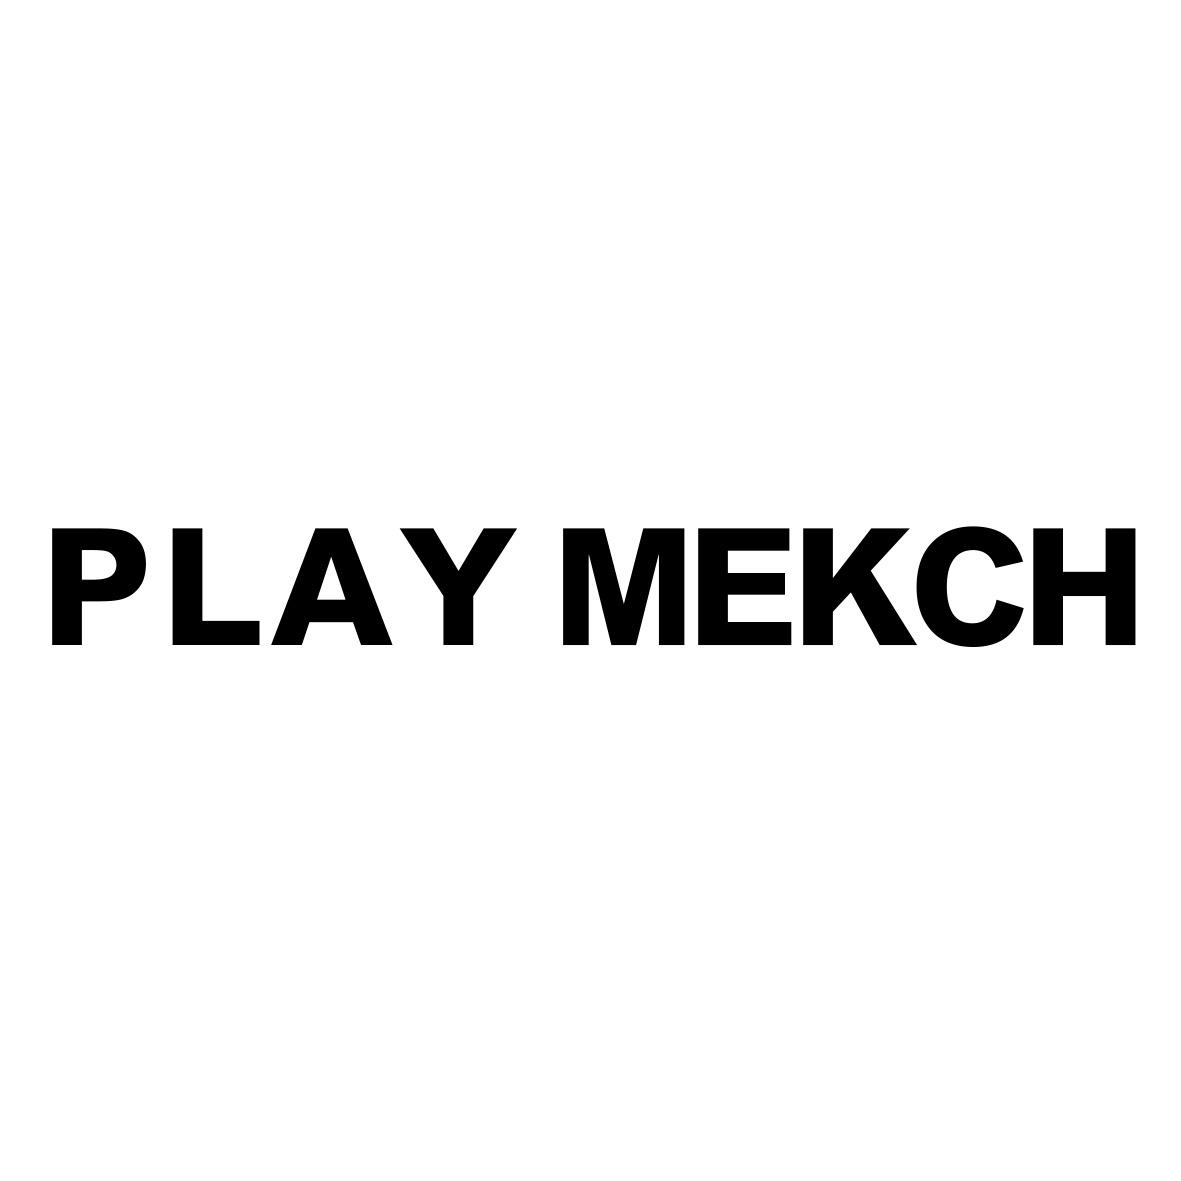 PLAY MEKCH